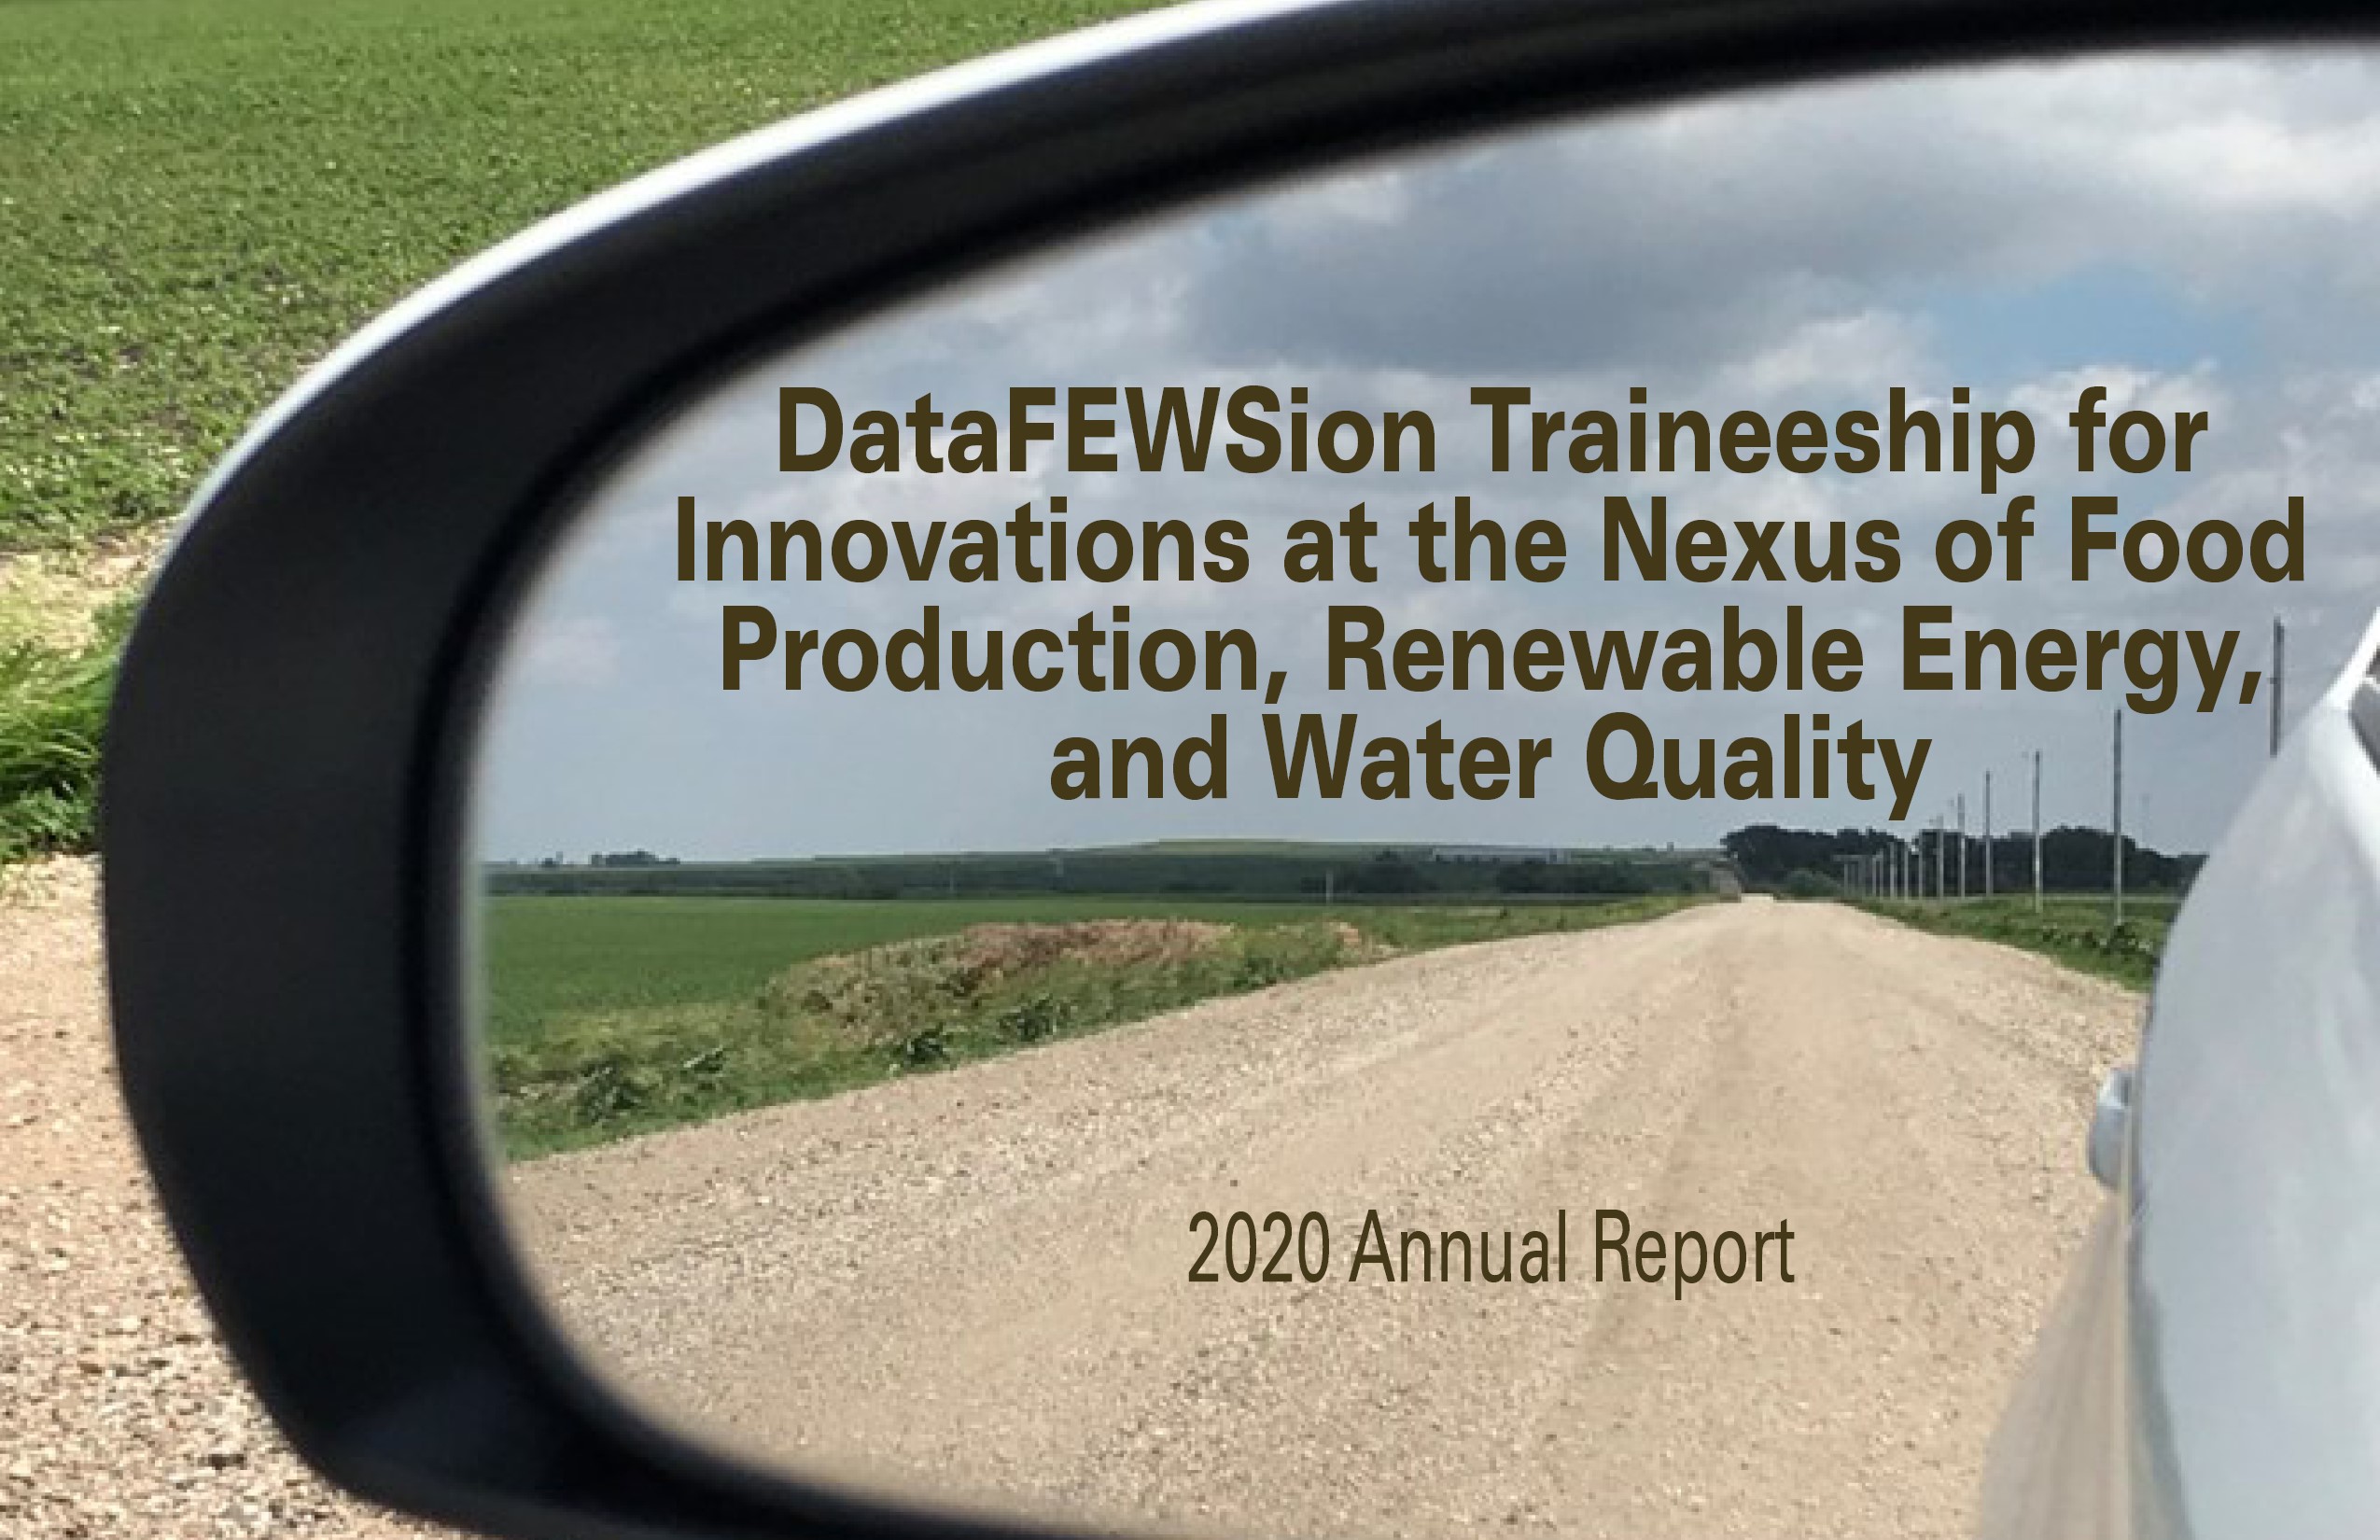 DataFEWSion Annual Report